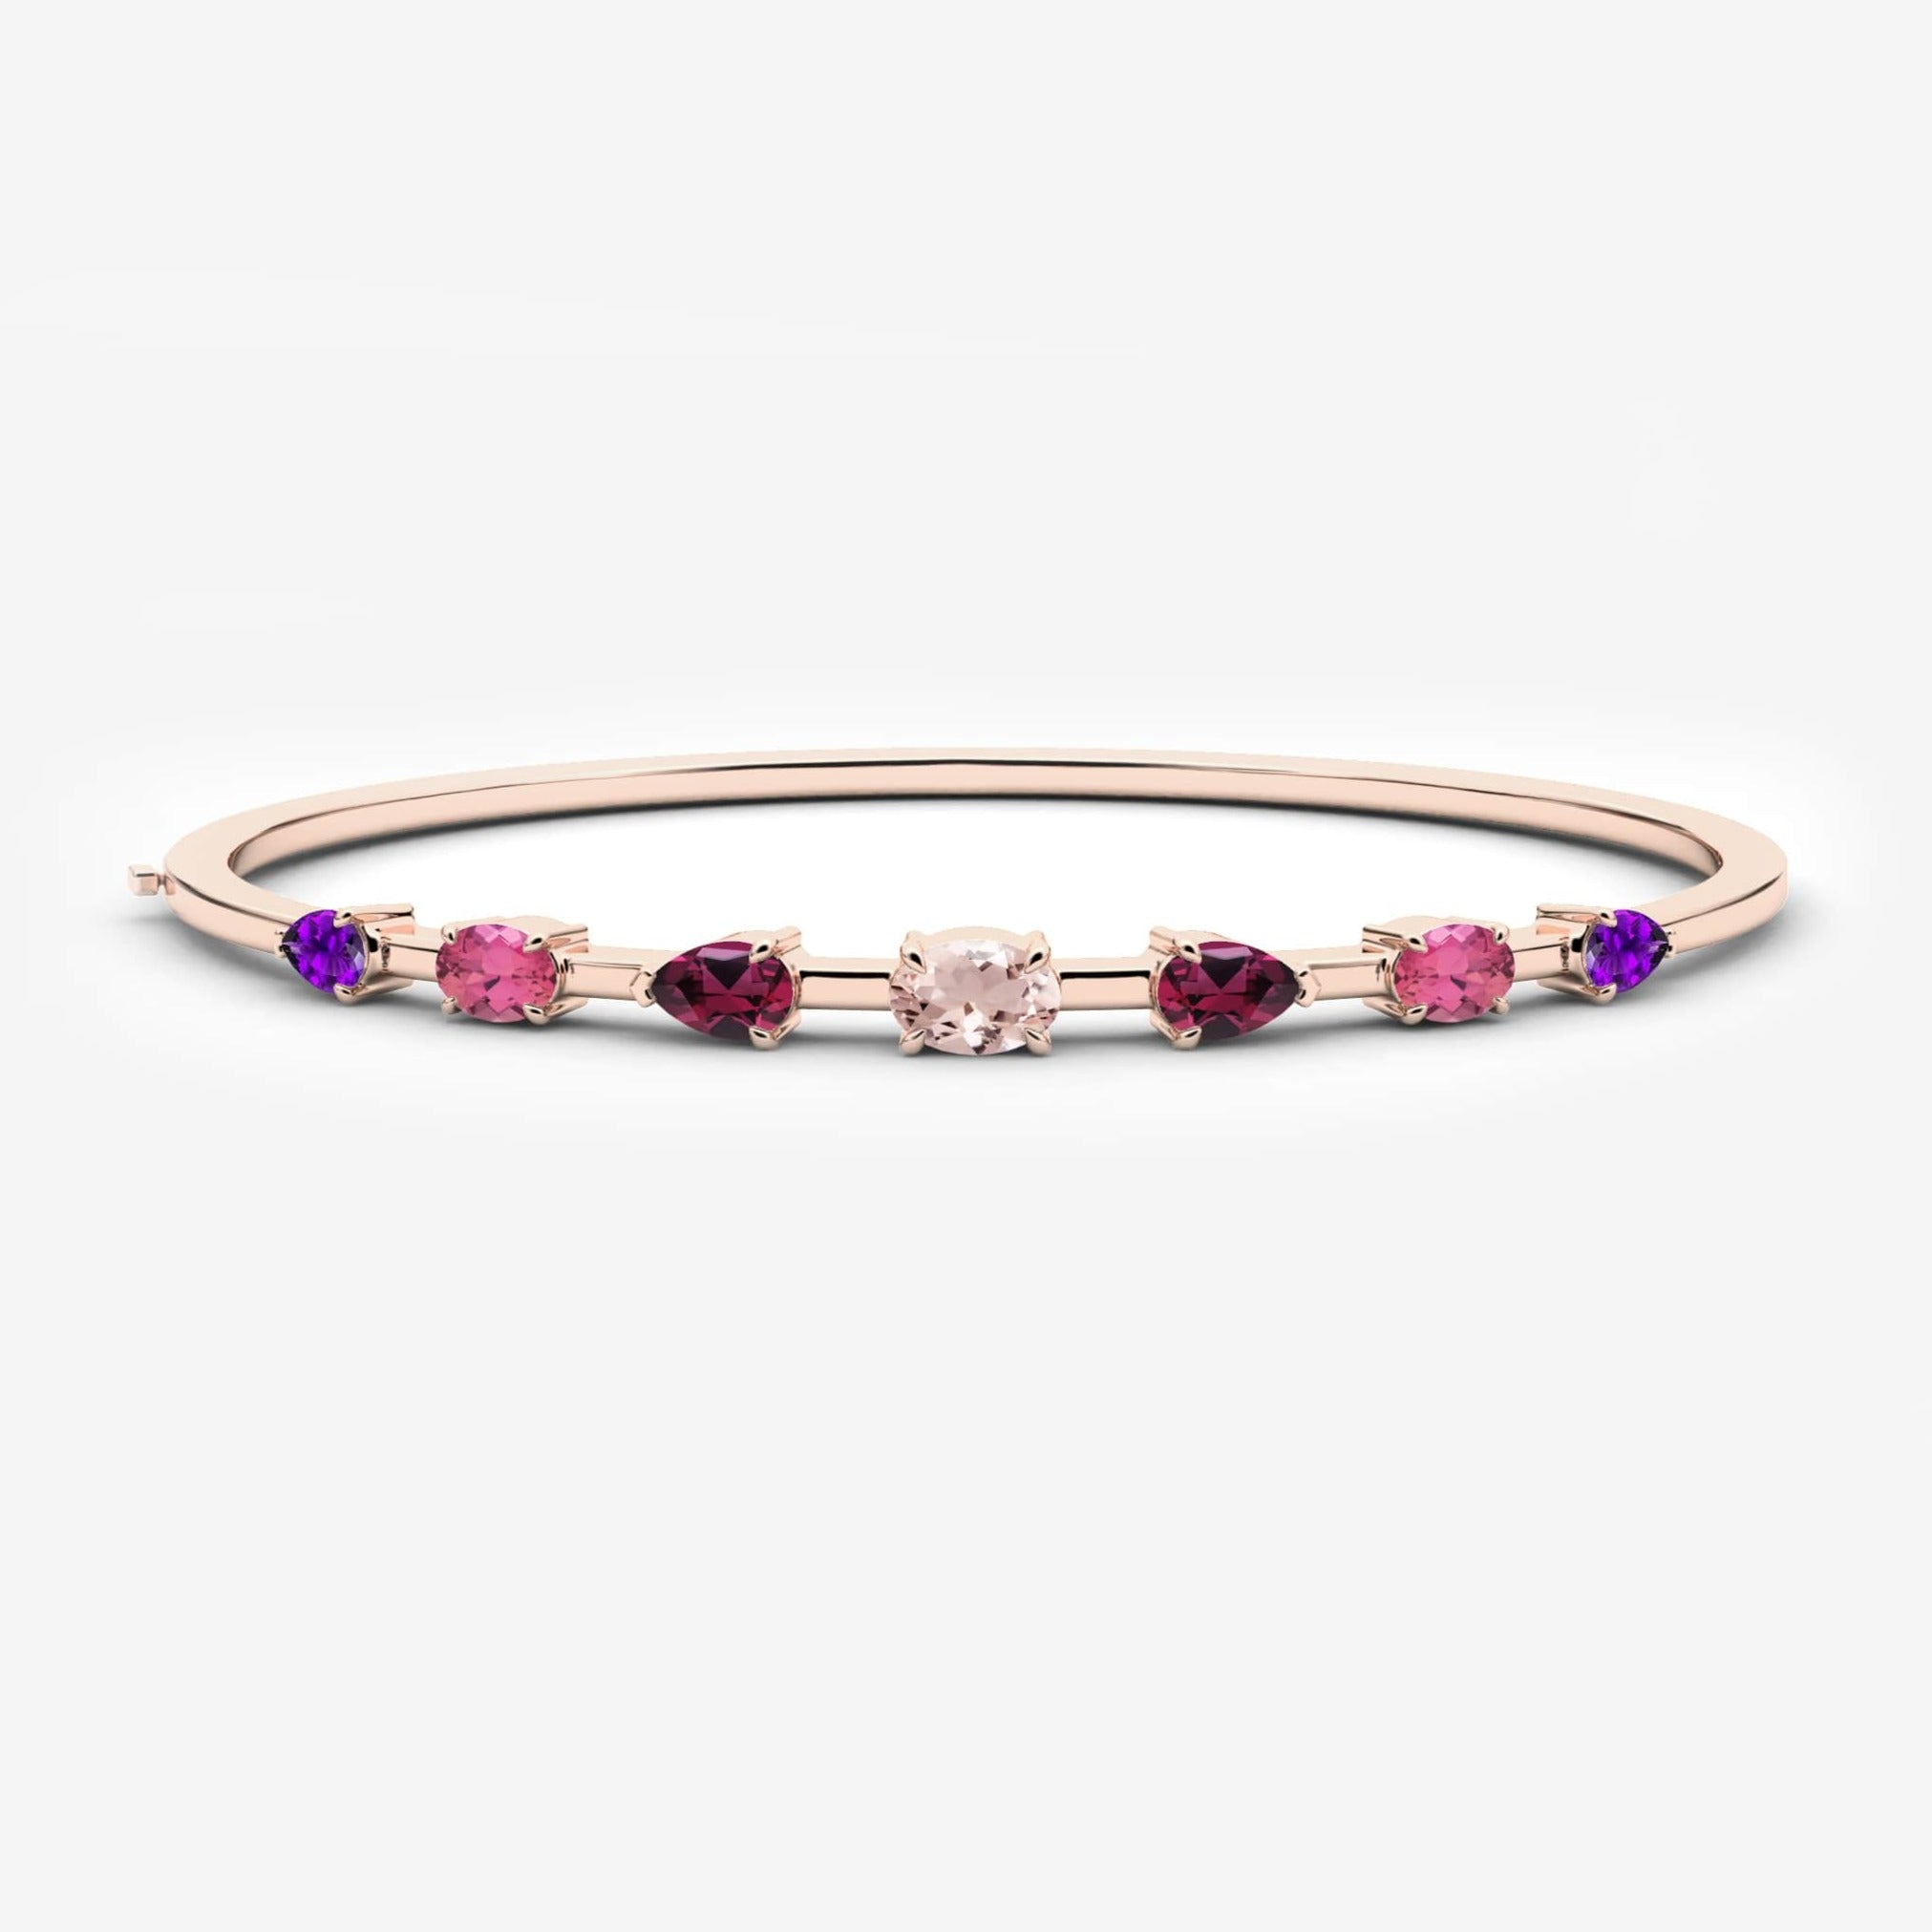 Rose gold gemstone bangle bracelet